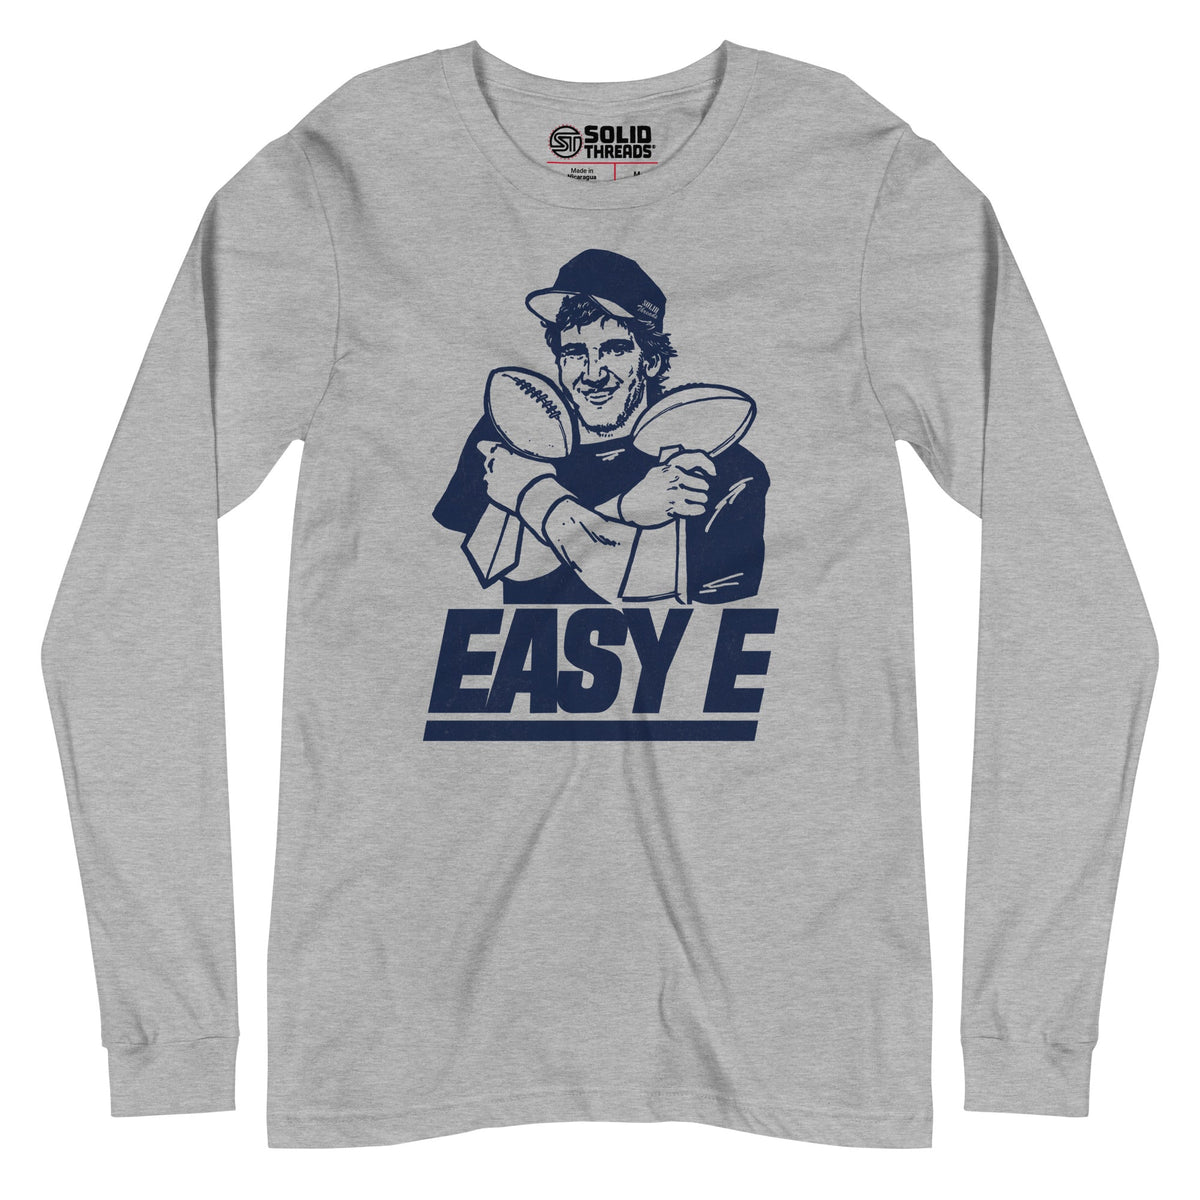 Unisex Easy E Retro Sports Shirt | Funny NY Giants Eli Manning Long Sleeve T-shirt | SOLID THREADS